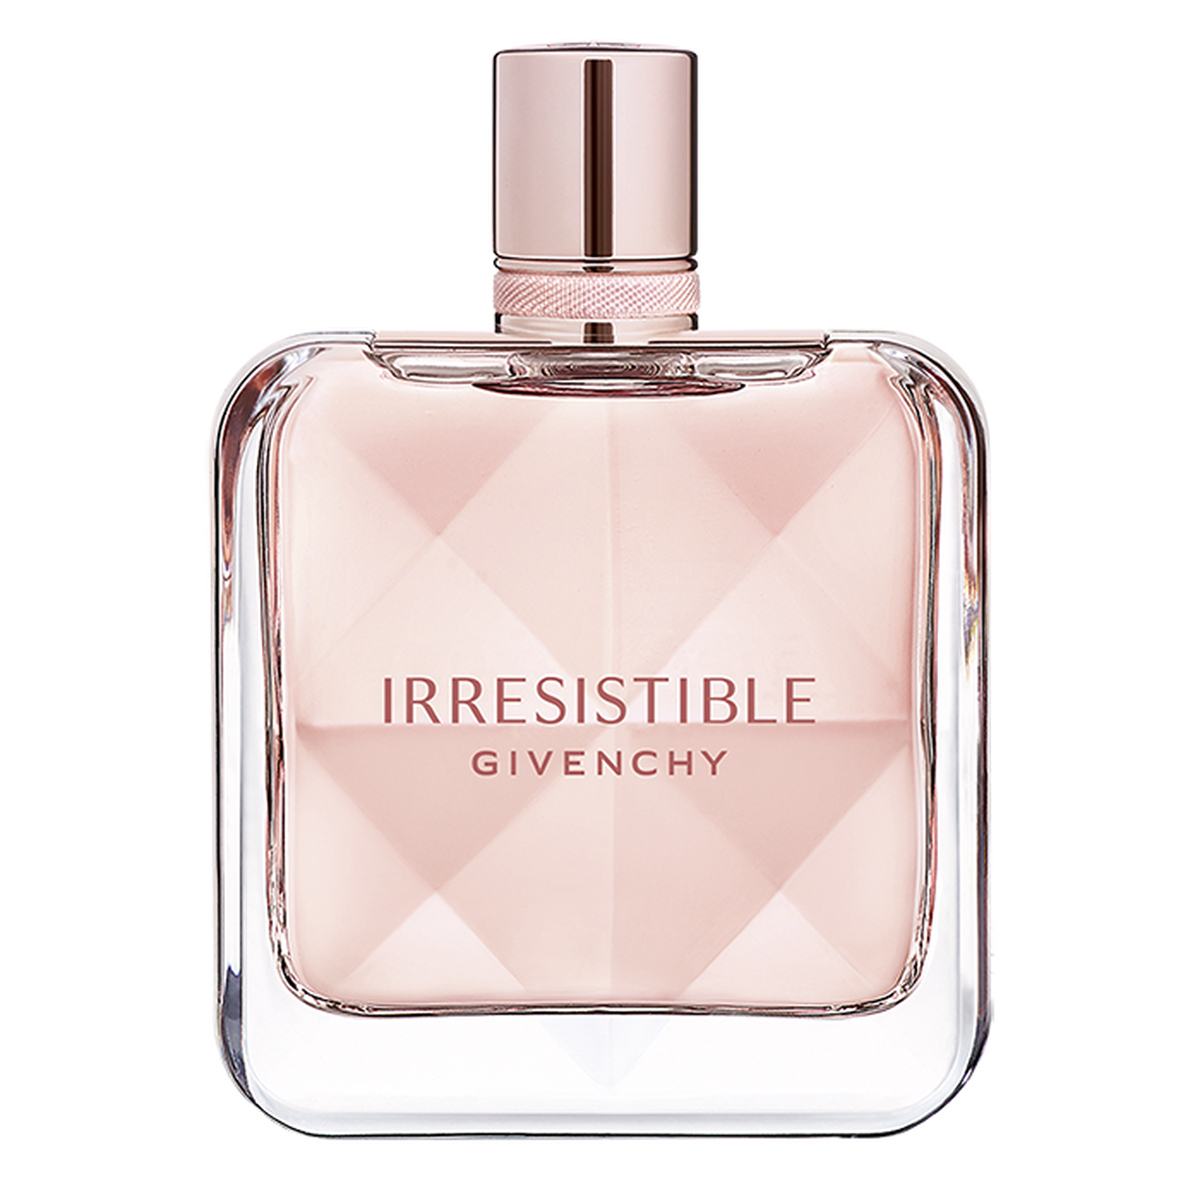 Irresistible - Eau de parfum fruity, woody, floral